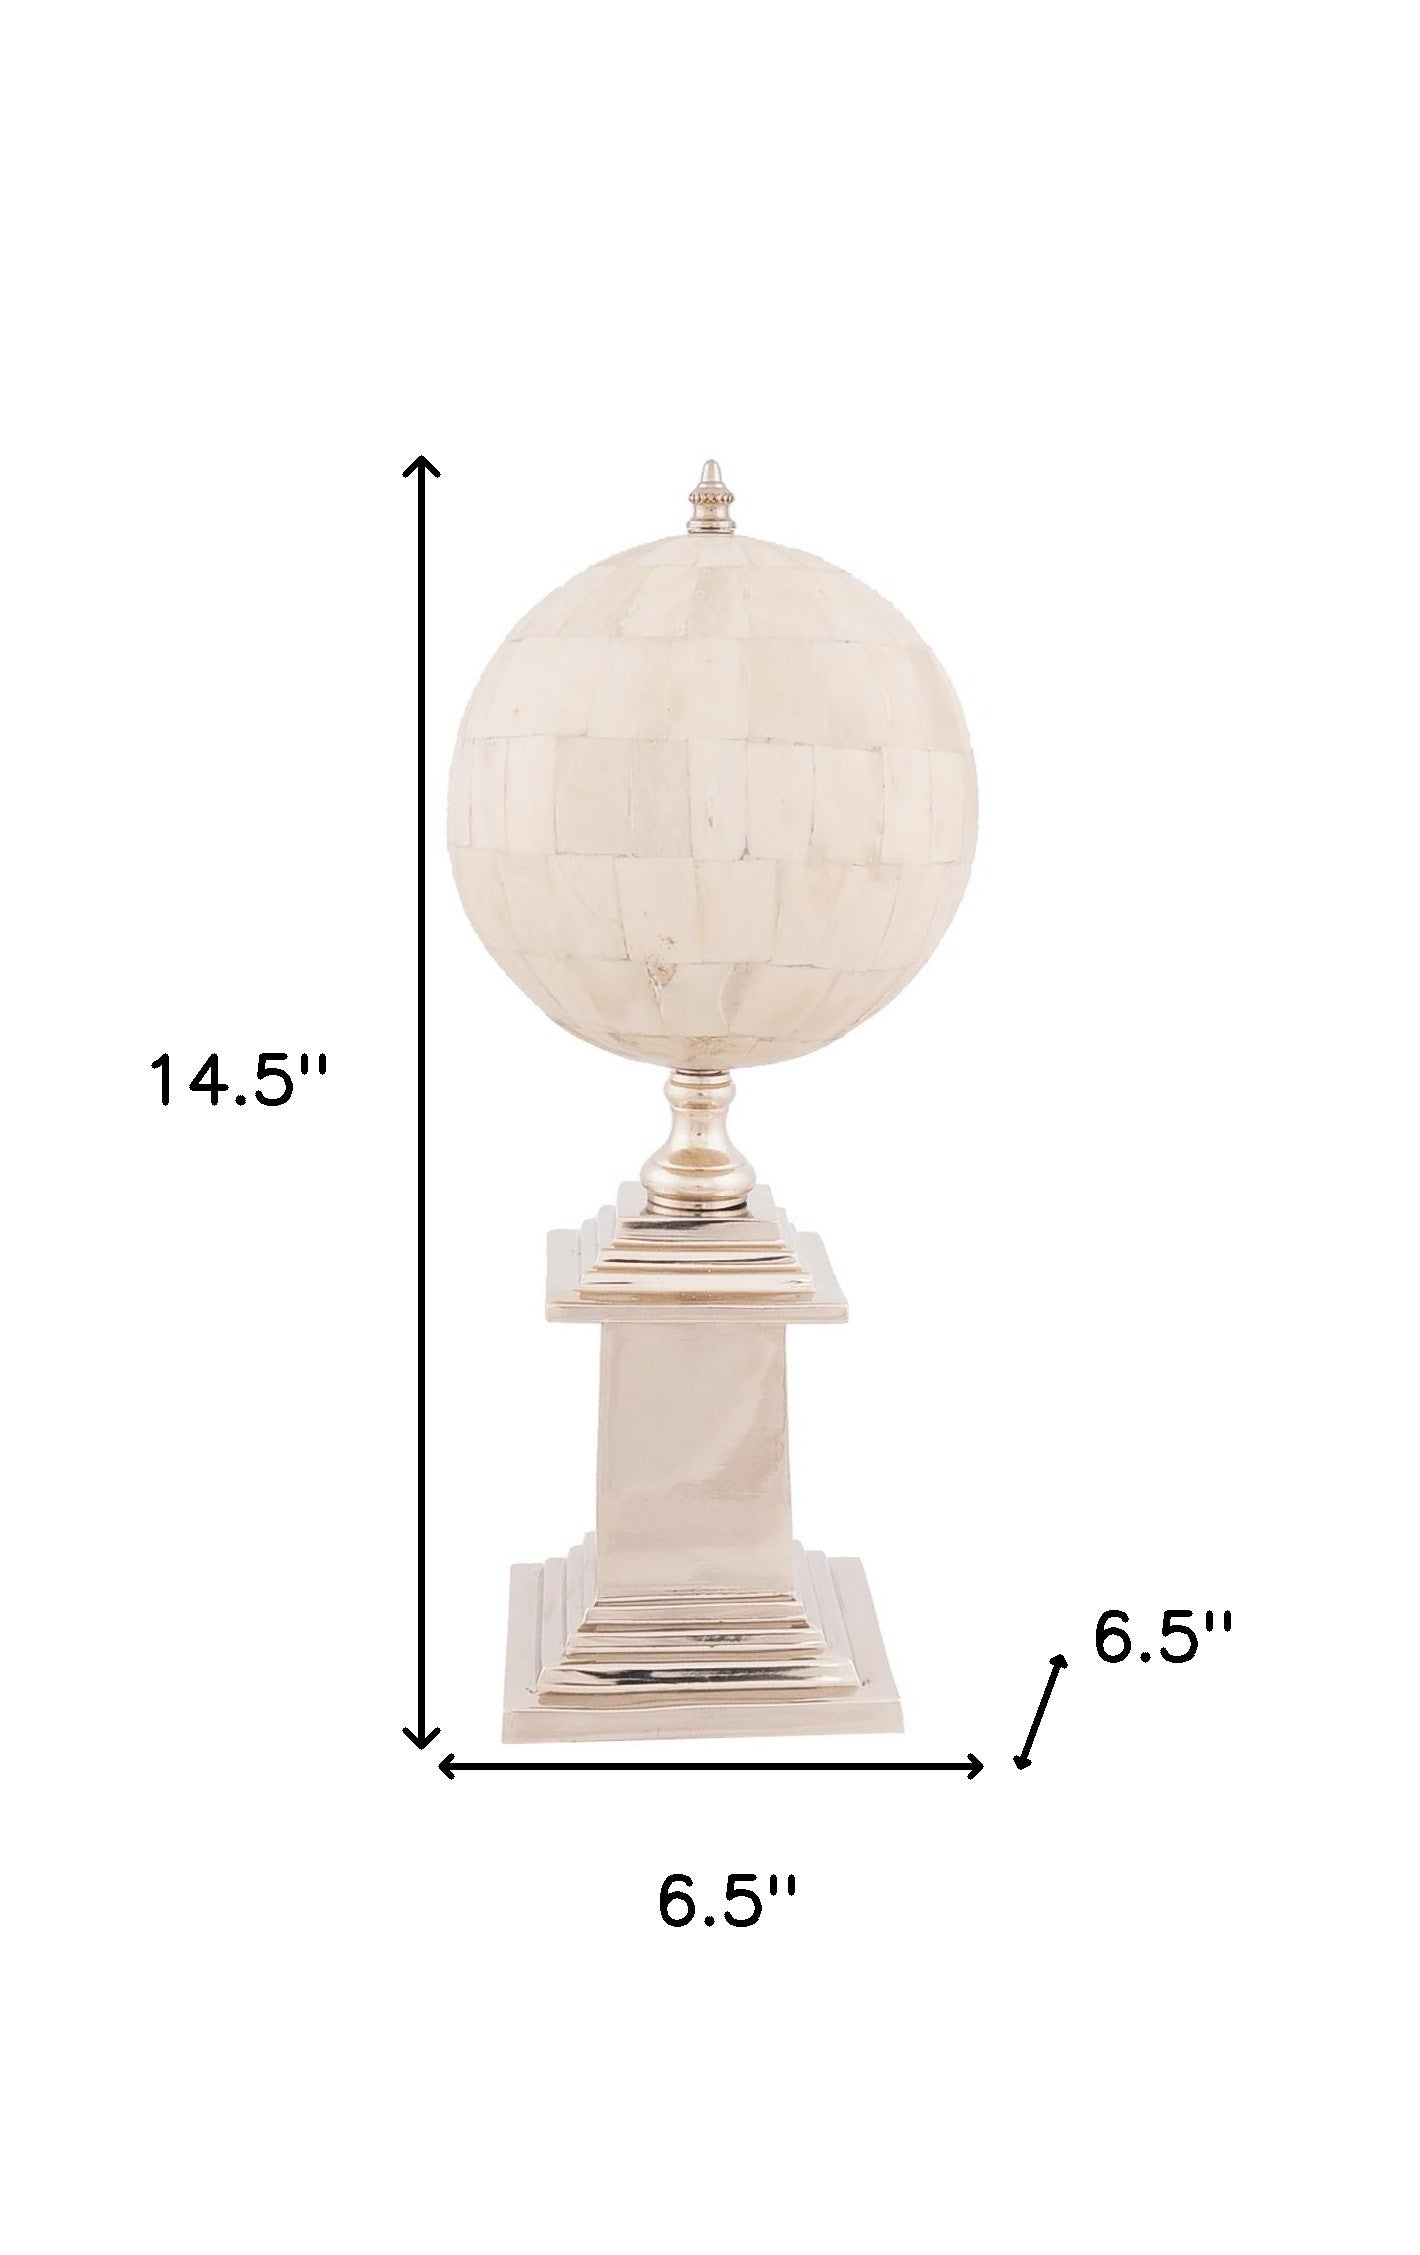 6.5" X 6.5" X 14.5" Bone Globe With Alluminum Base